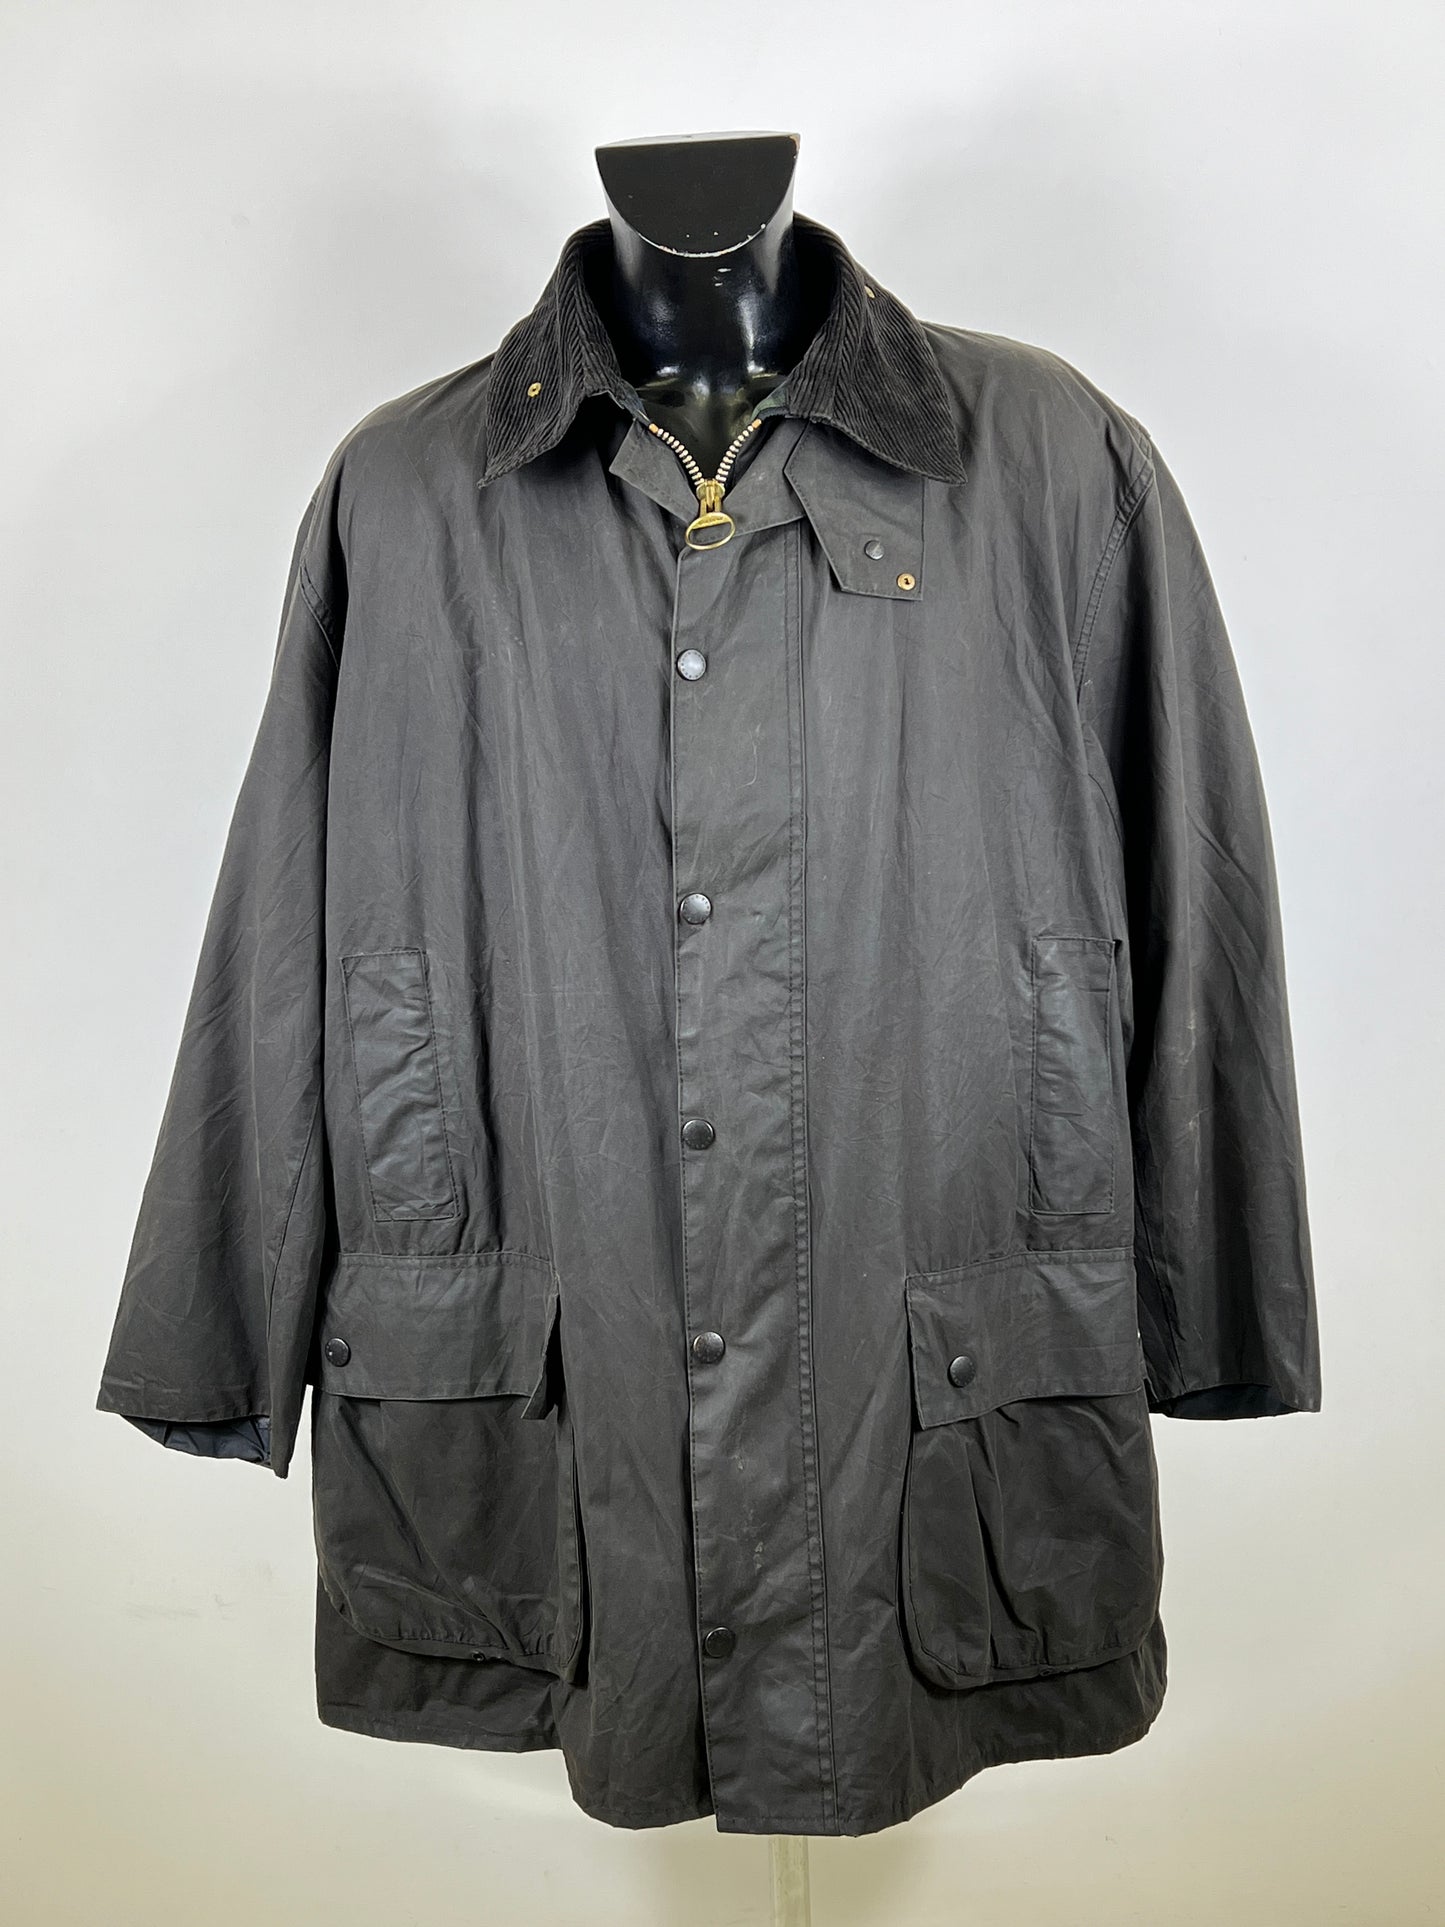 Barbour Giacca Border Nero Vintage Uomo Cerata C50/127 cm - Black wax coat size XXL